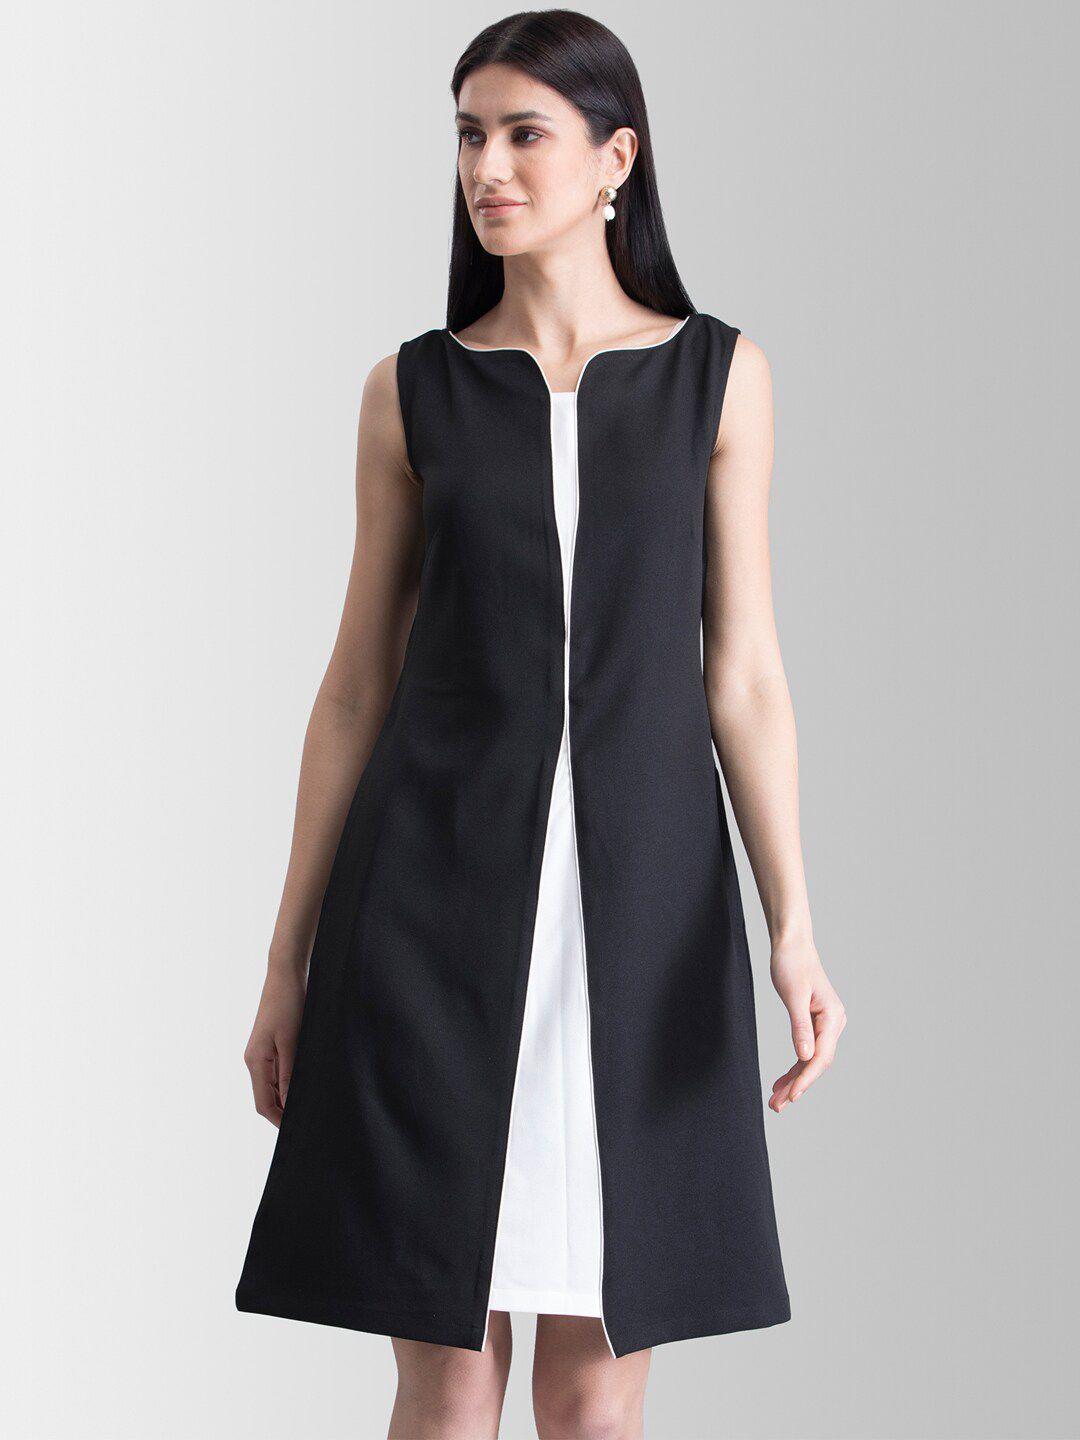 fablestreet women black & white colourblocked a-line dress